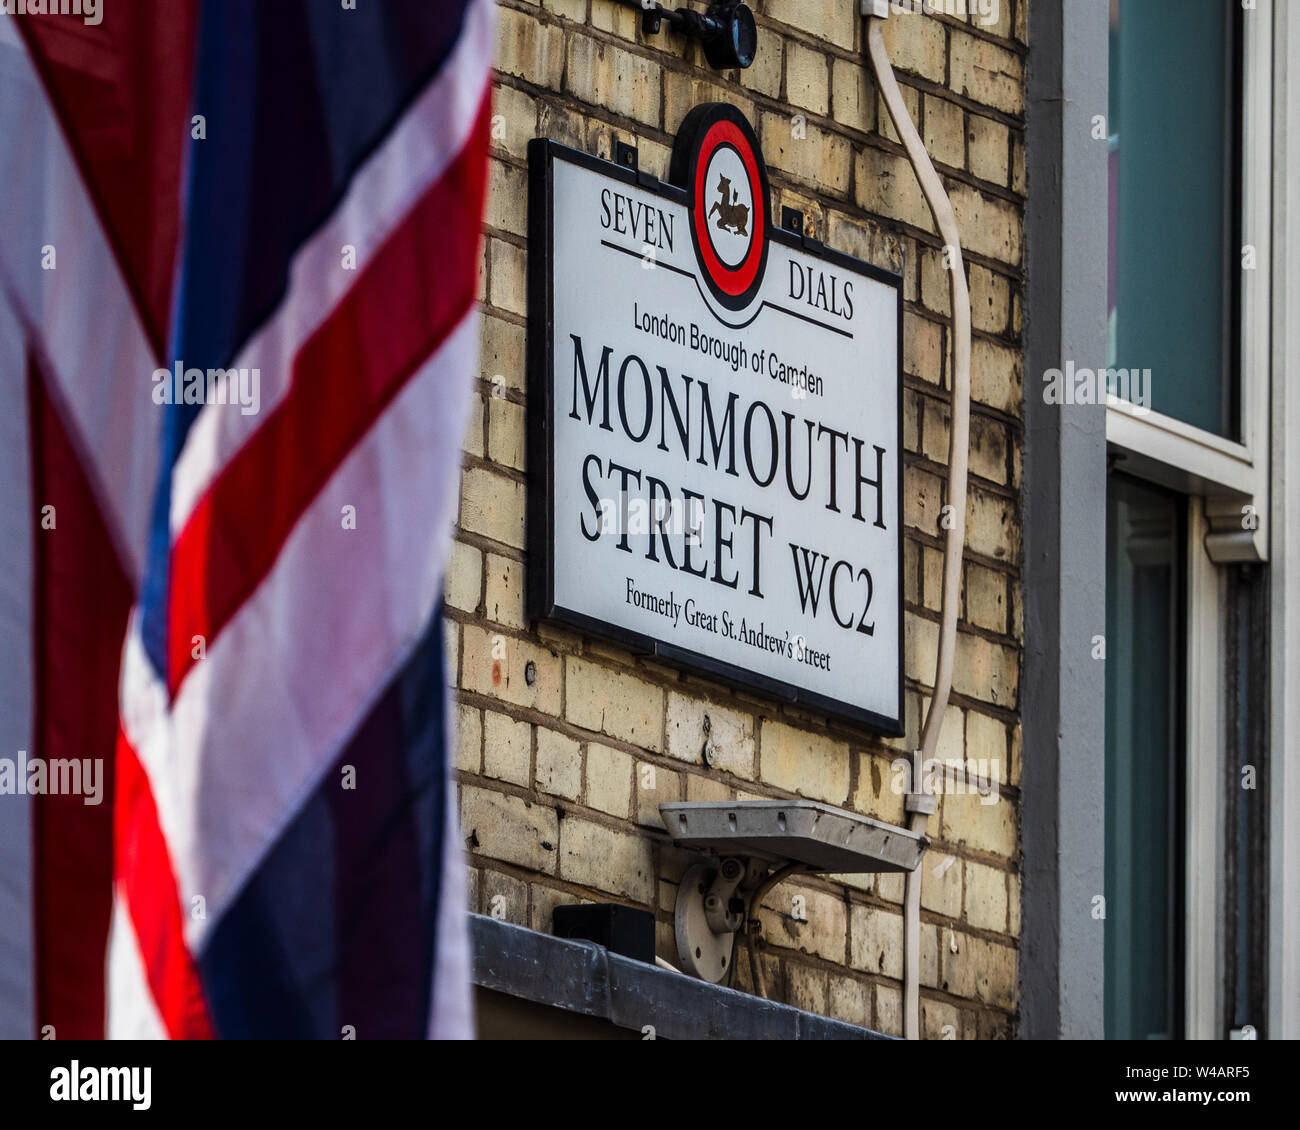 Monmouth Street Seven Dials - London Street Signs - Monmouth Street nel quartiere Seven Dials di Londra Foto Stock